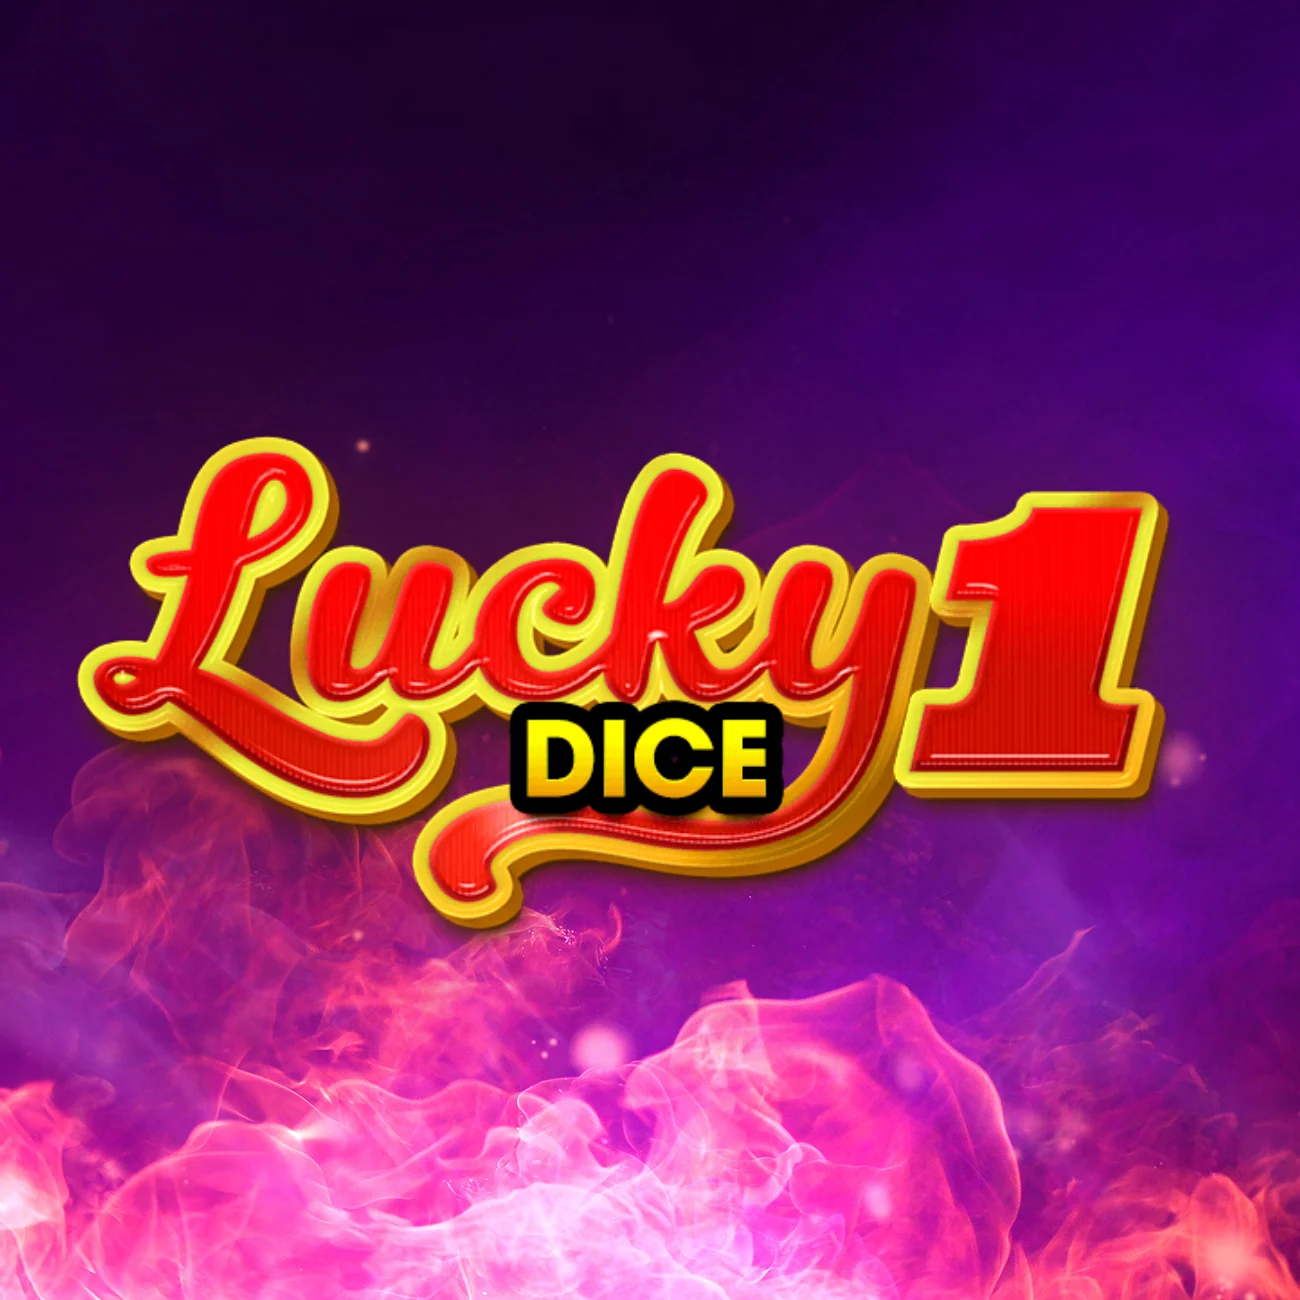 Play Lucky Dice 1 on Starcasinodice.be online casino